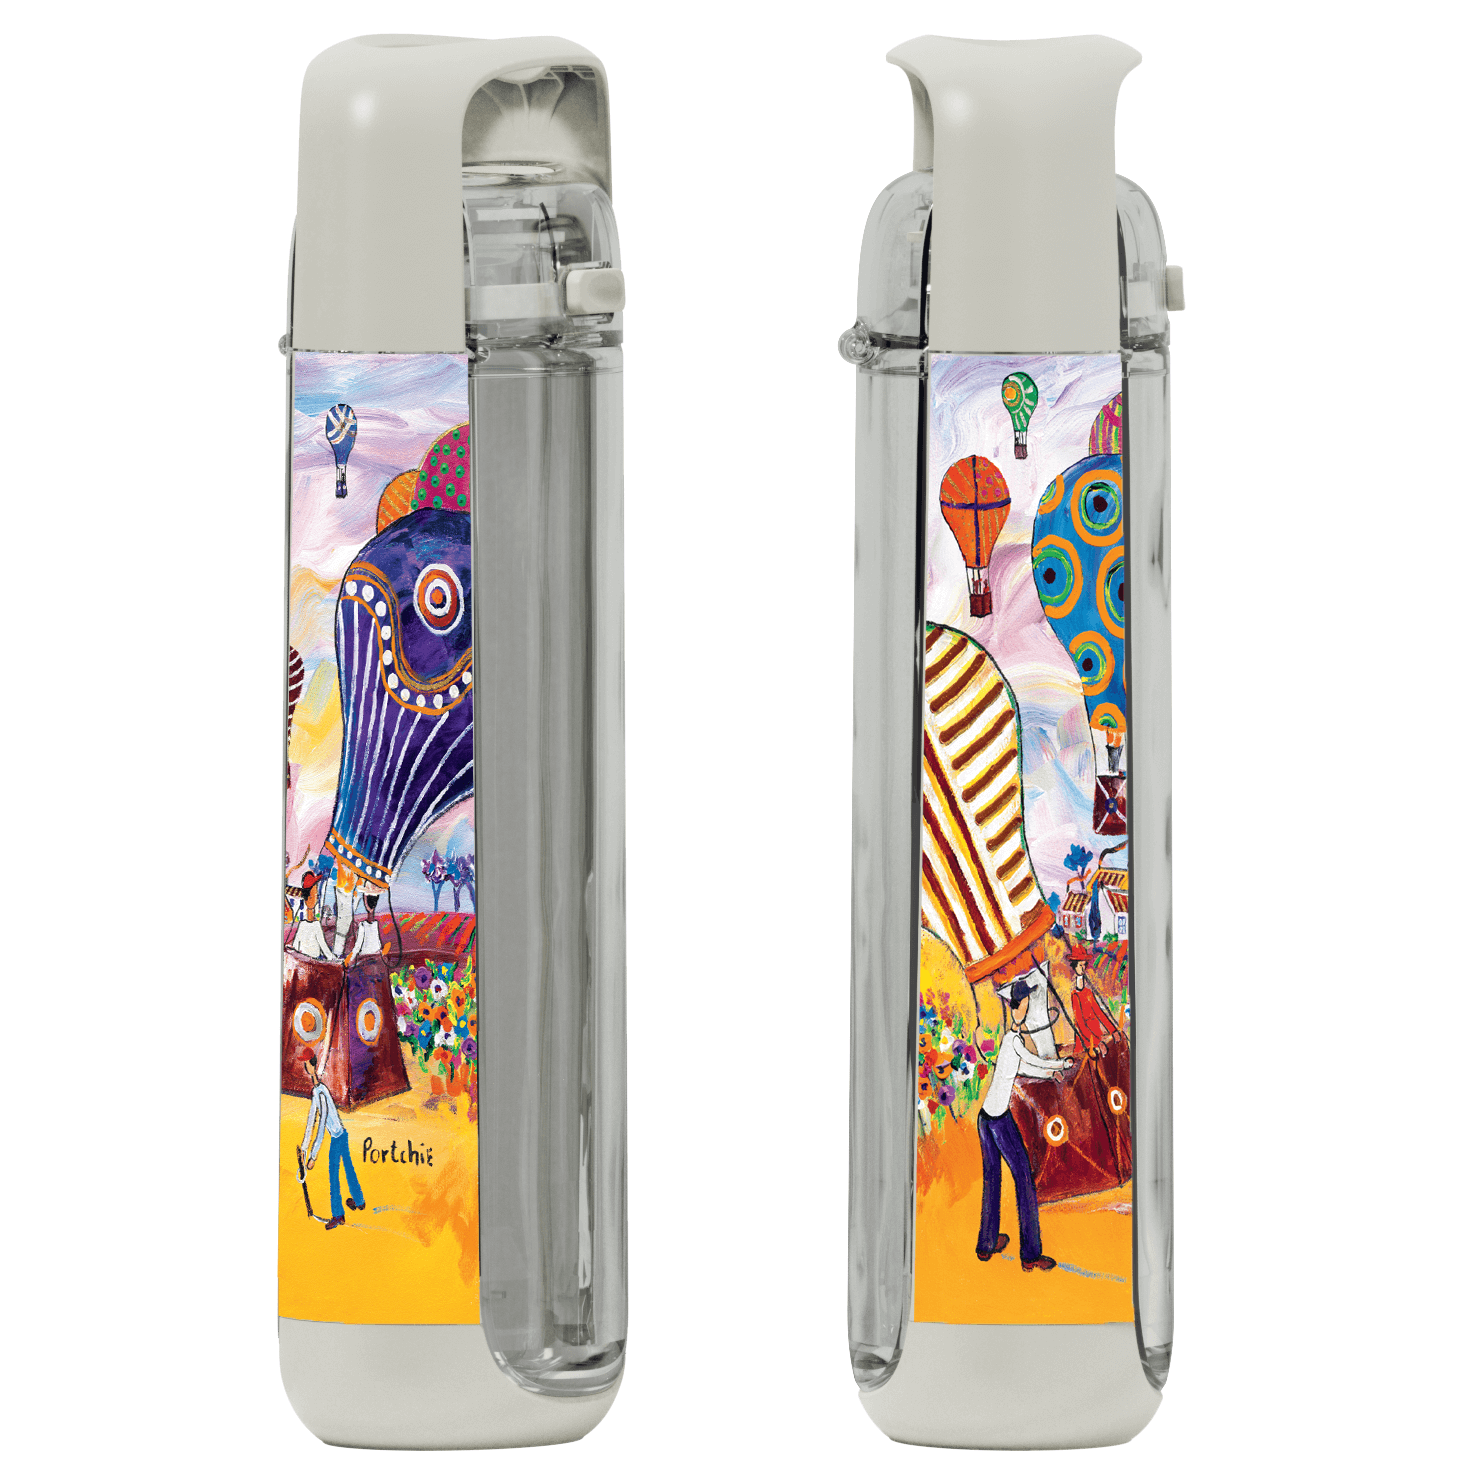 Kor Water Bottle with Portchie artwork